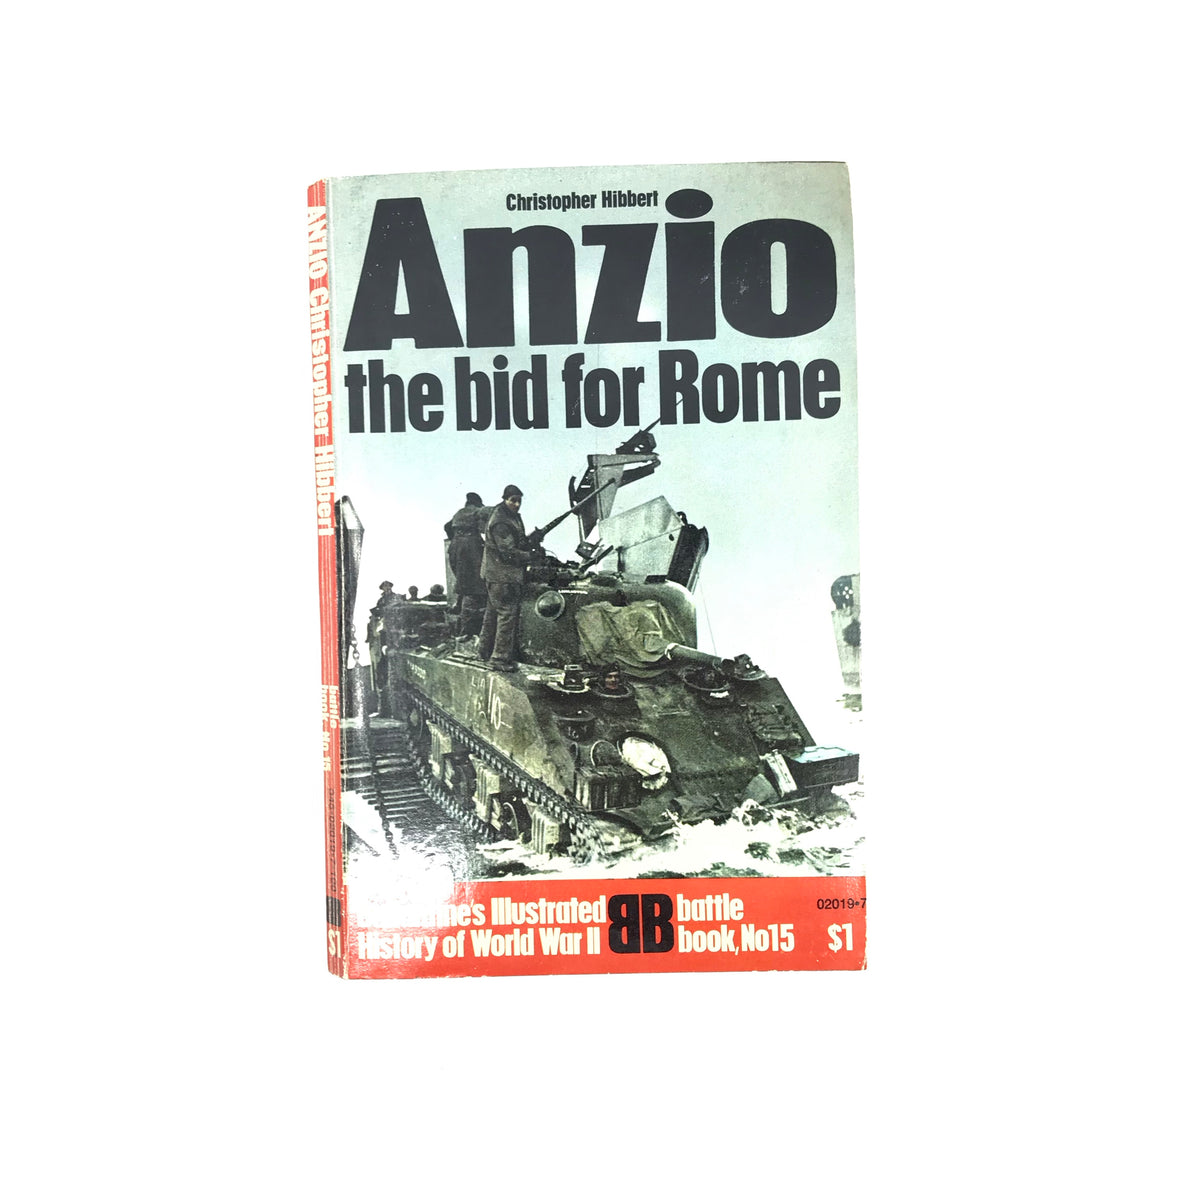 Ballantine&#39;s Illustrated History of World War II: Battle Book No15 - Anzio The Bid for Rome (Christopher Hibbert)